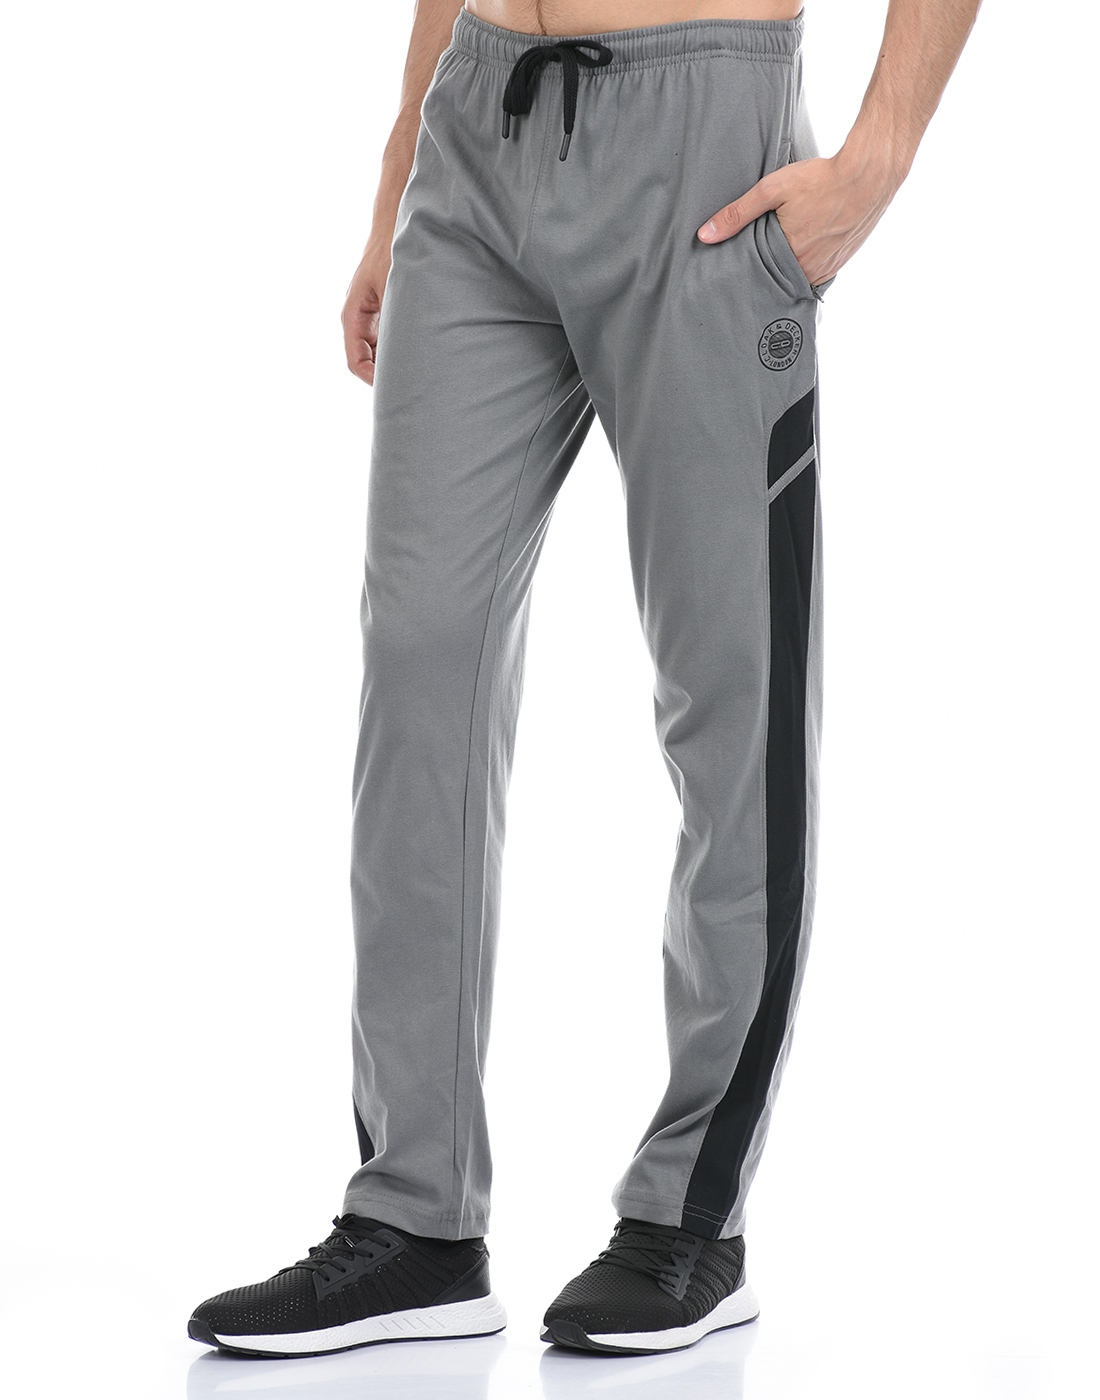 Buy Grey Track Pants for Men by Jockey Online